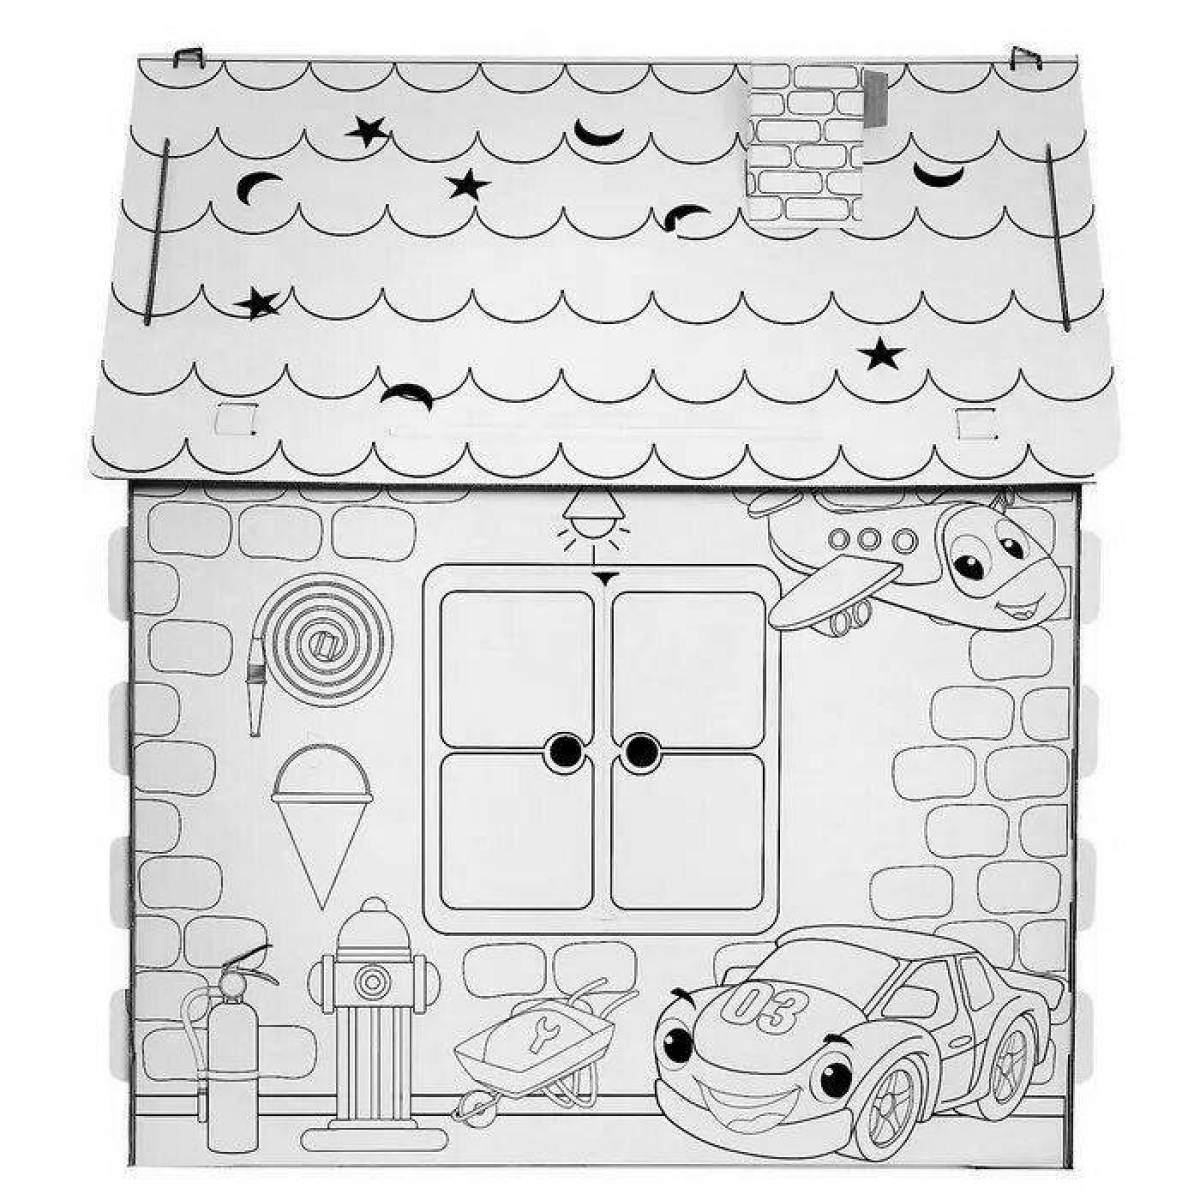 Cardboard house #1